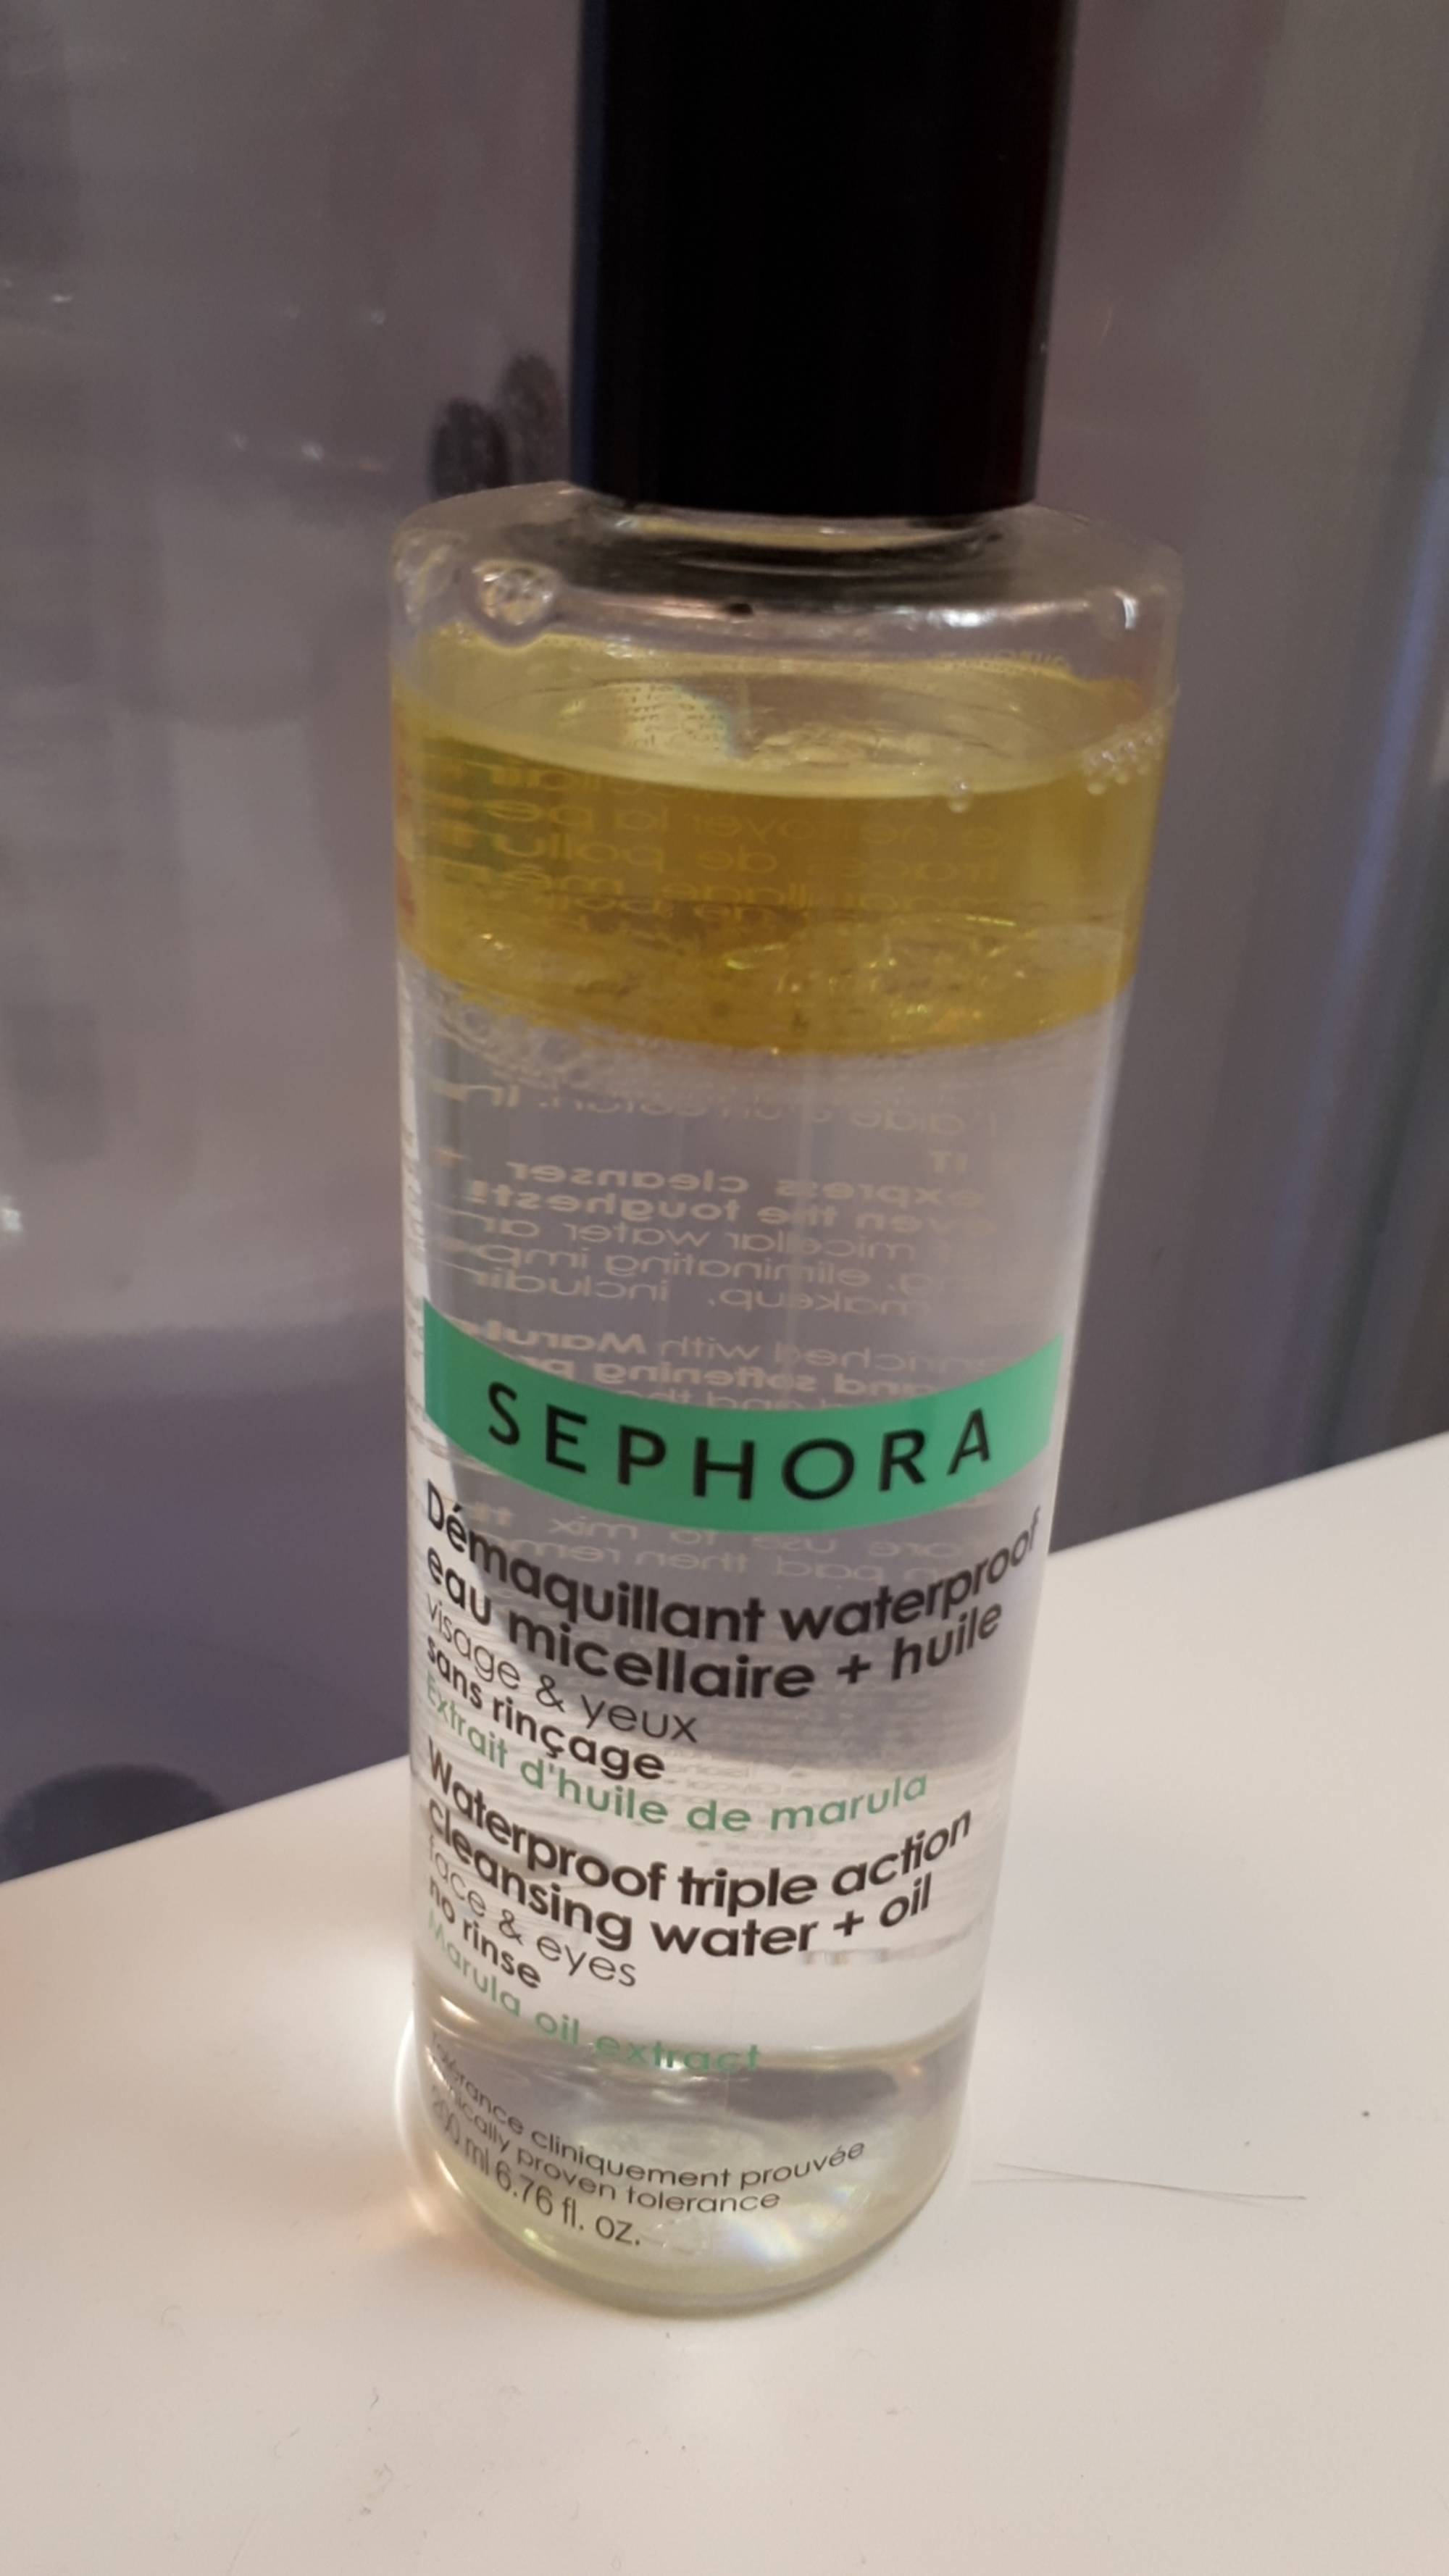 SEPHORA - Démaquillant waterproof - Eau micellaire + huile